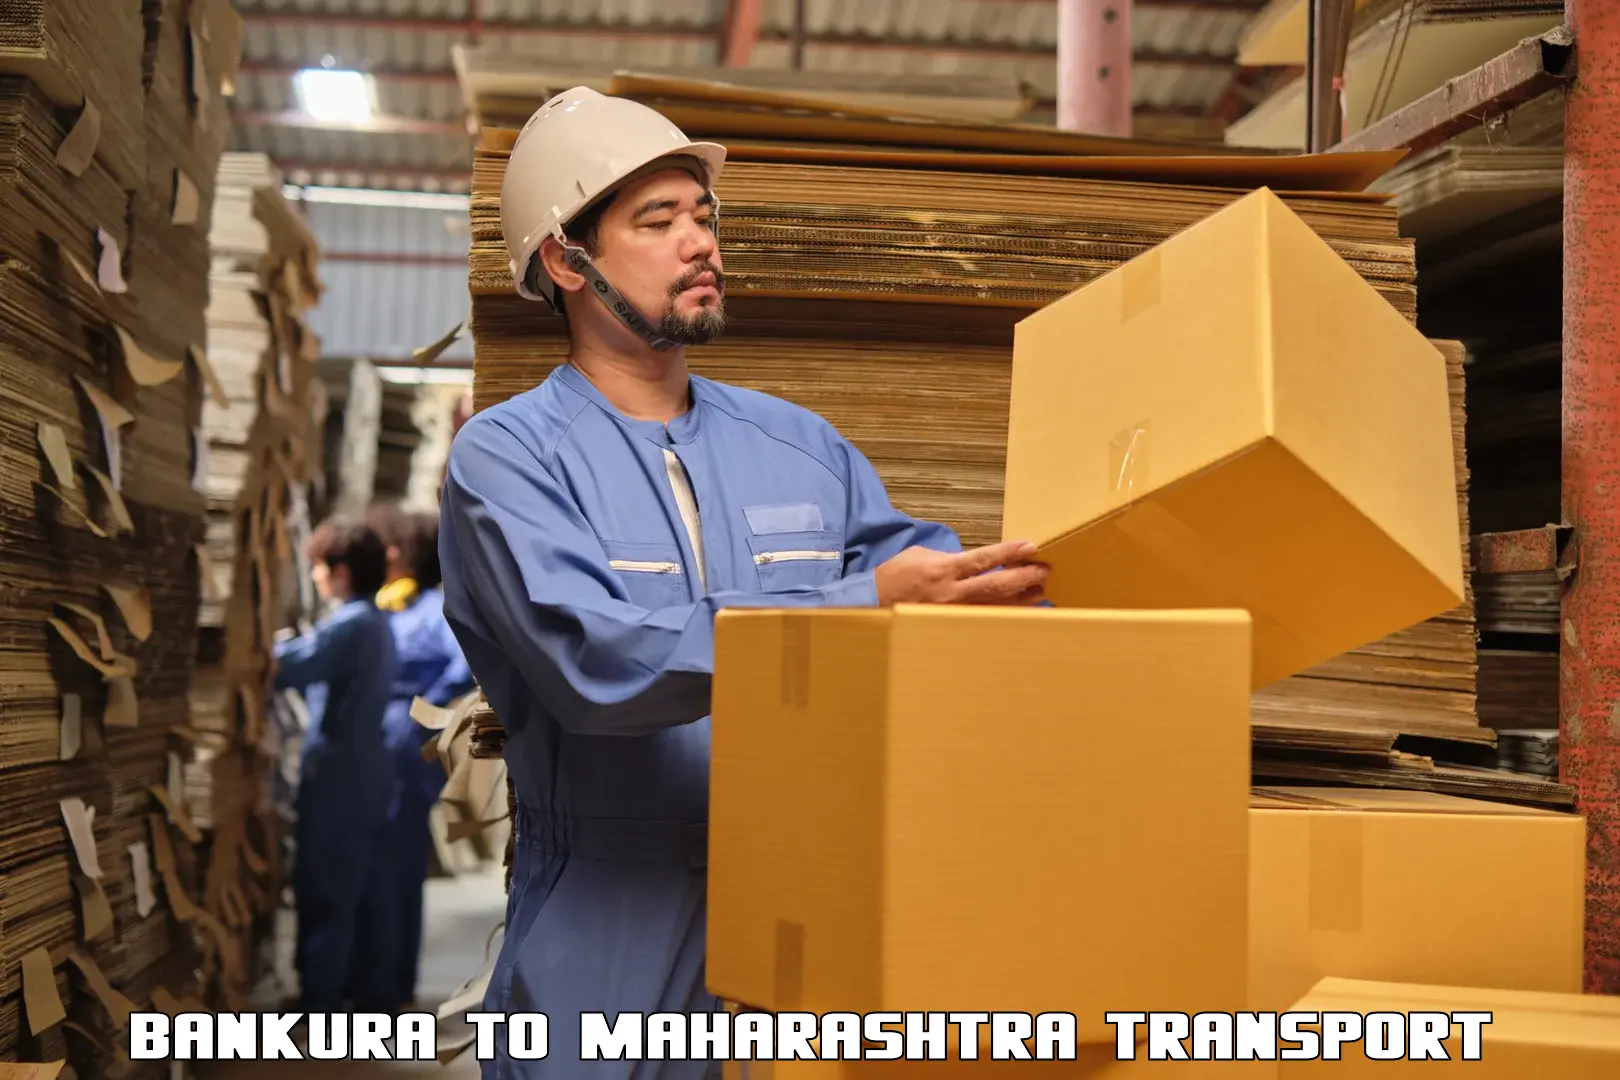 Goods delivery service Bankura to Kalbadevi